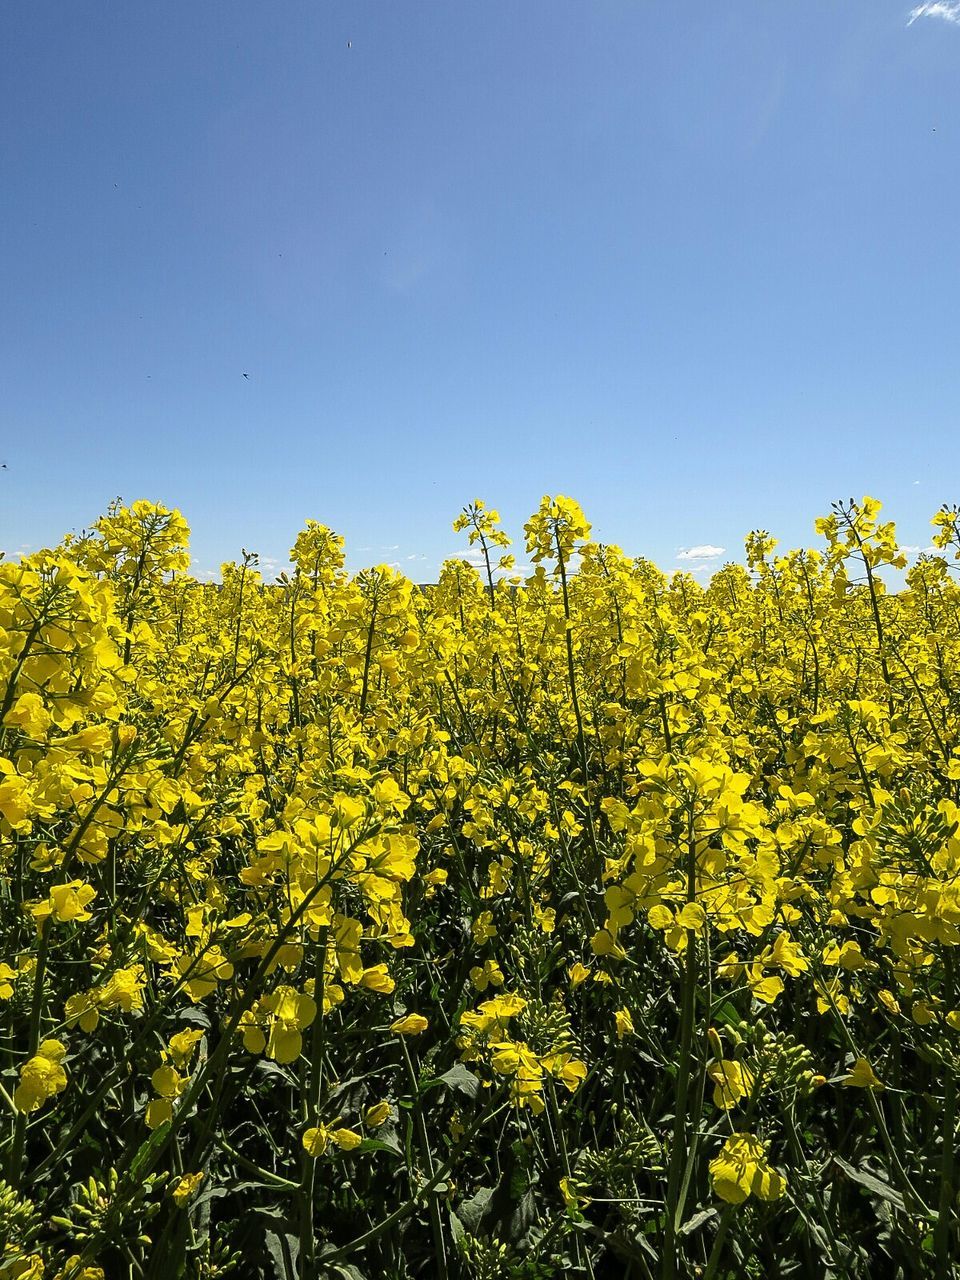 Yellow oilseed rape flowers blooming in field against clear sky